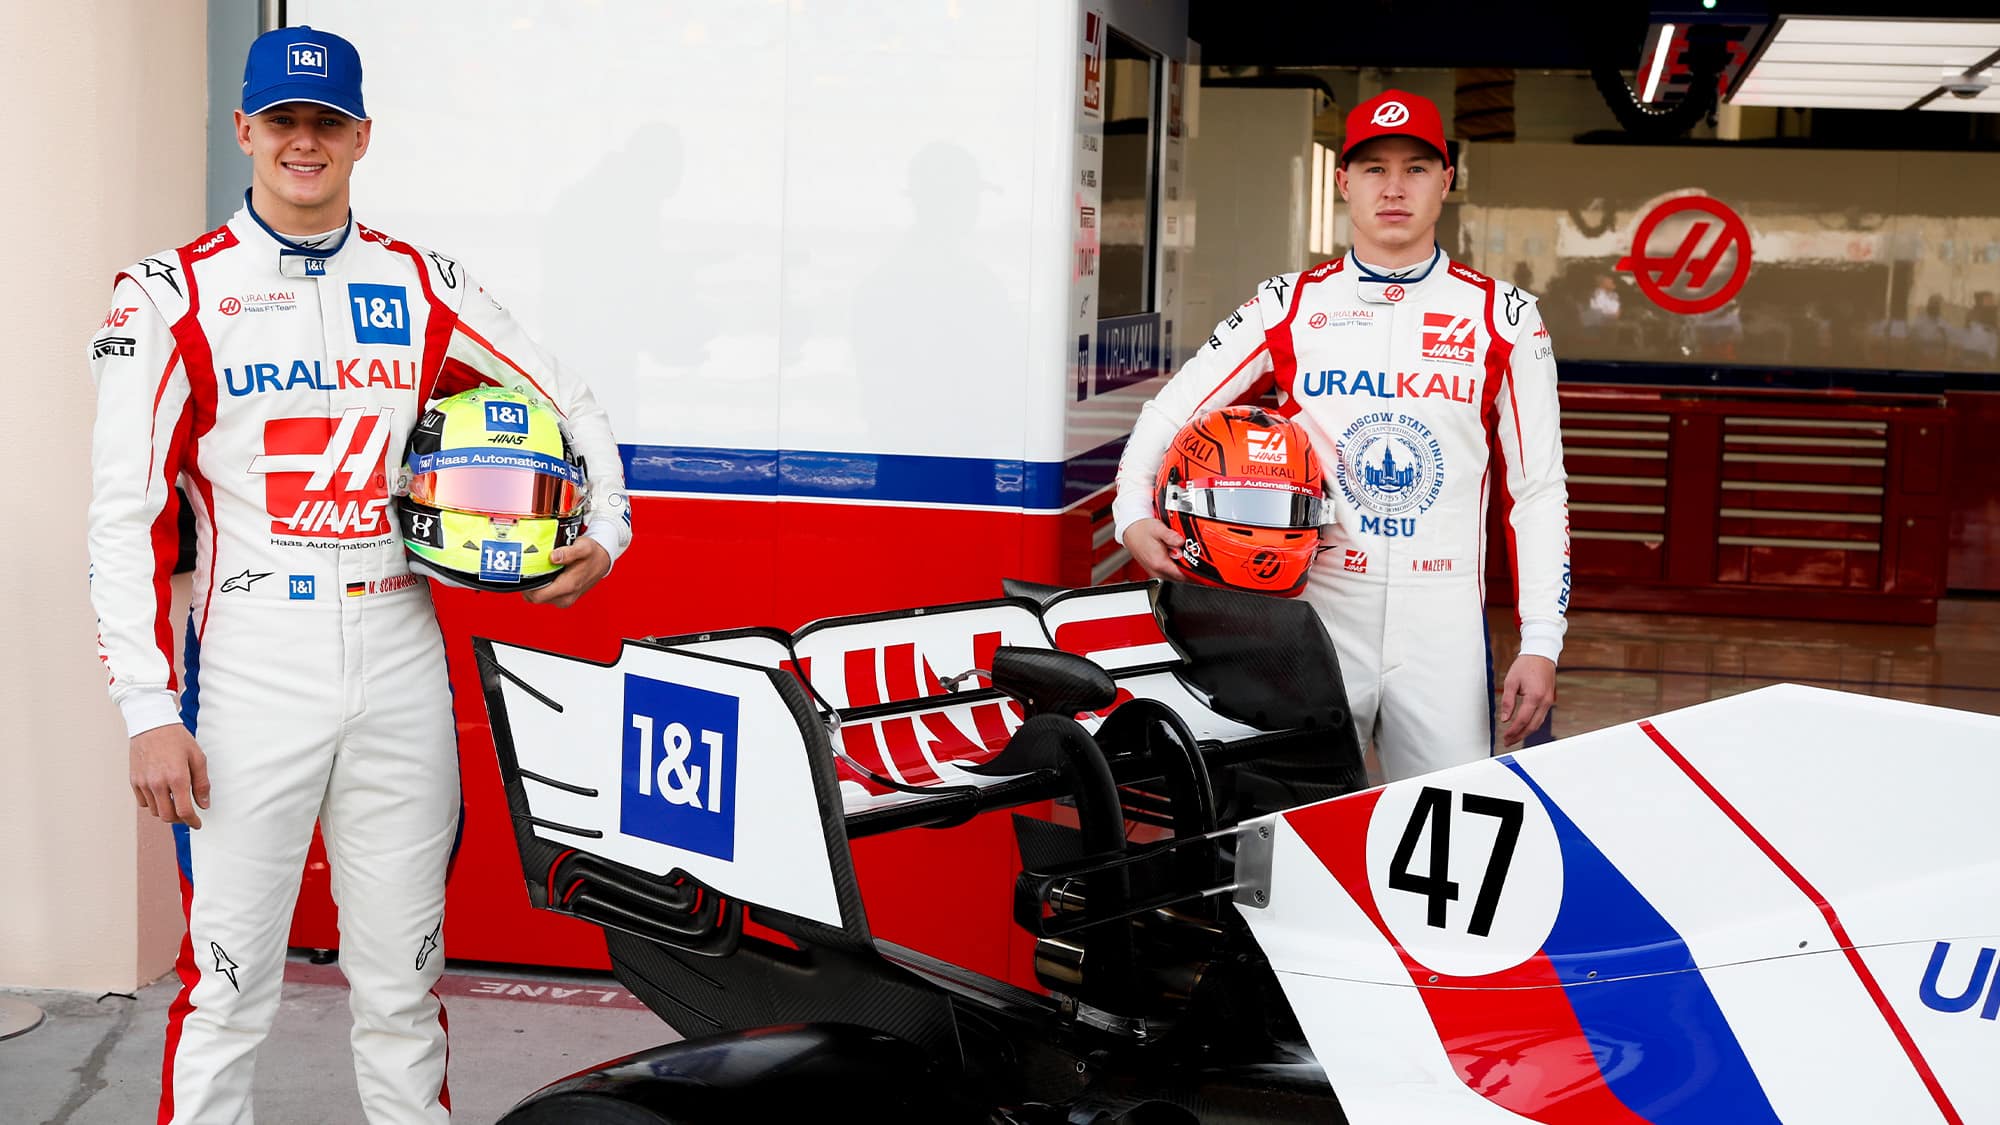 Mick Schumacher and Nikita Mazepin ahead of the 2021 F1 season